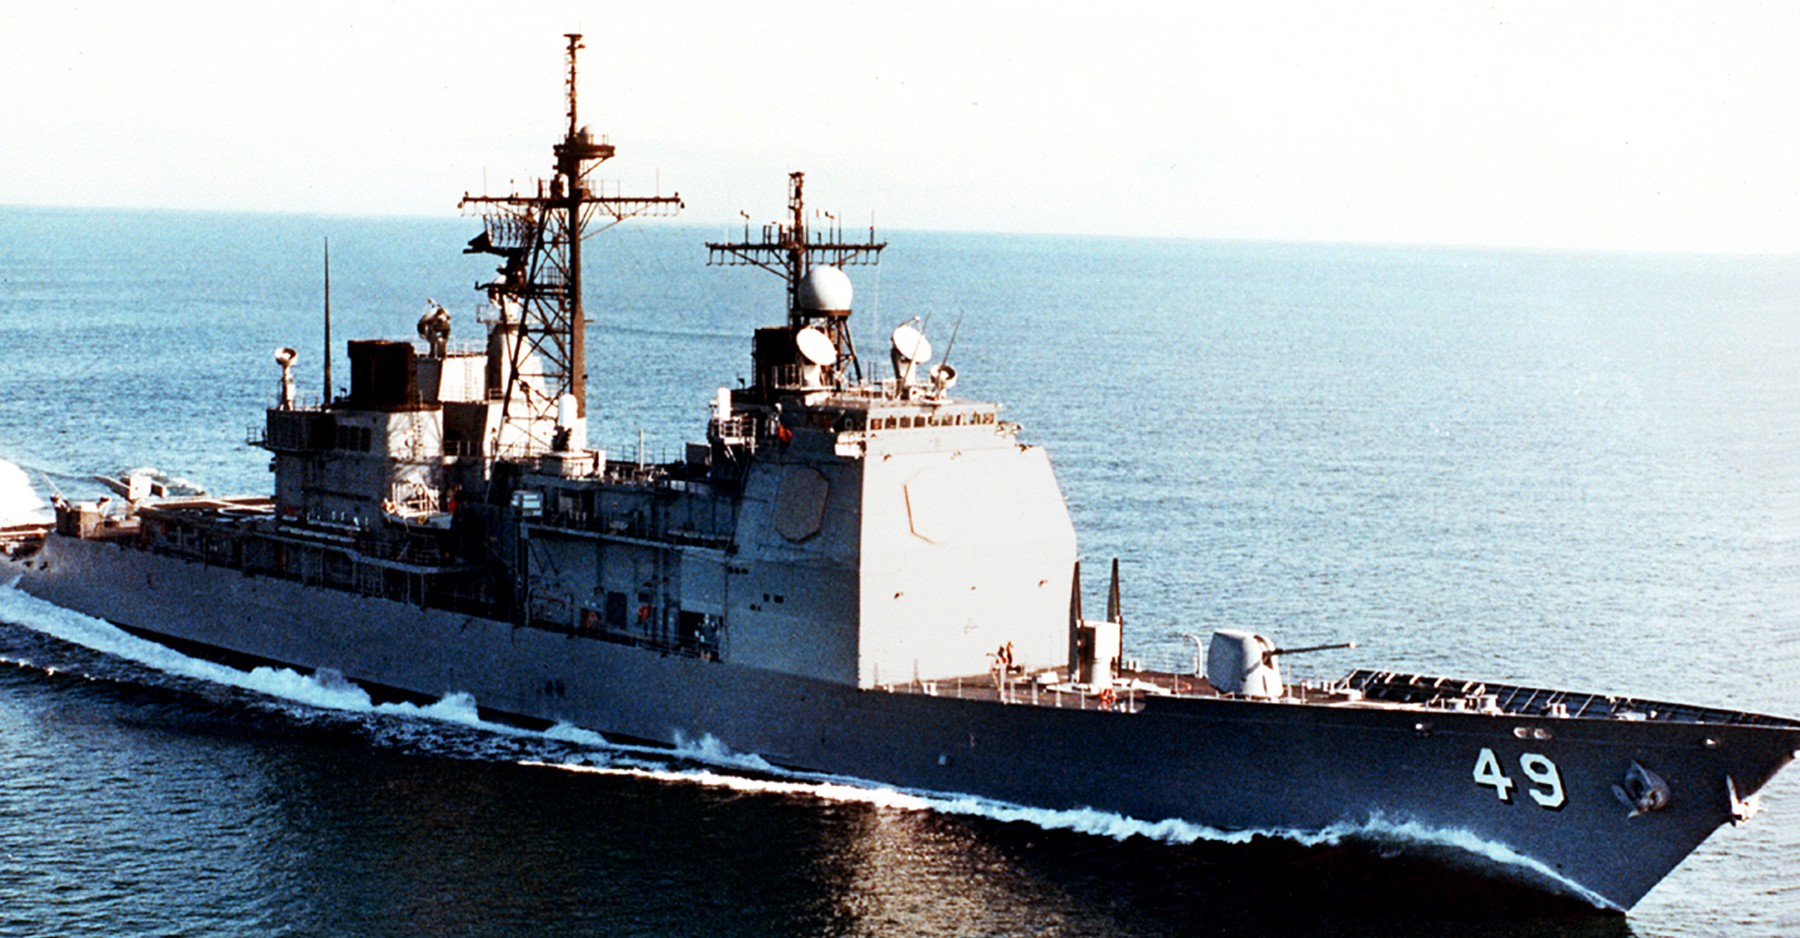 cg-49 uss vincennes ticonderoga class guided missile cruiser aegis us navy builder's sea trials 42